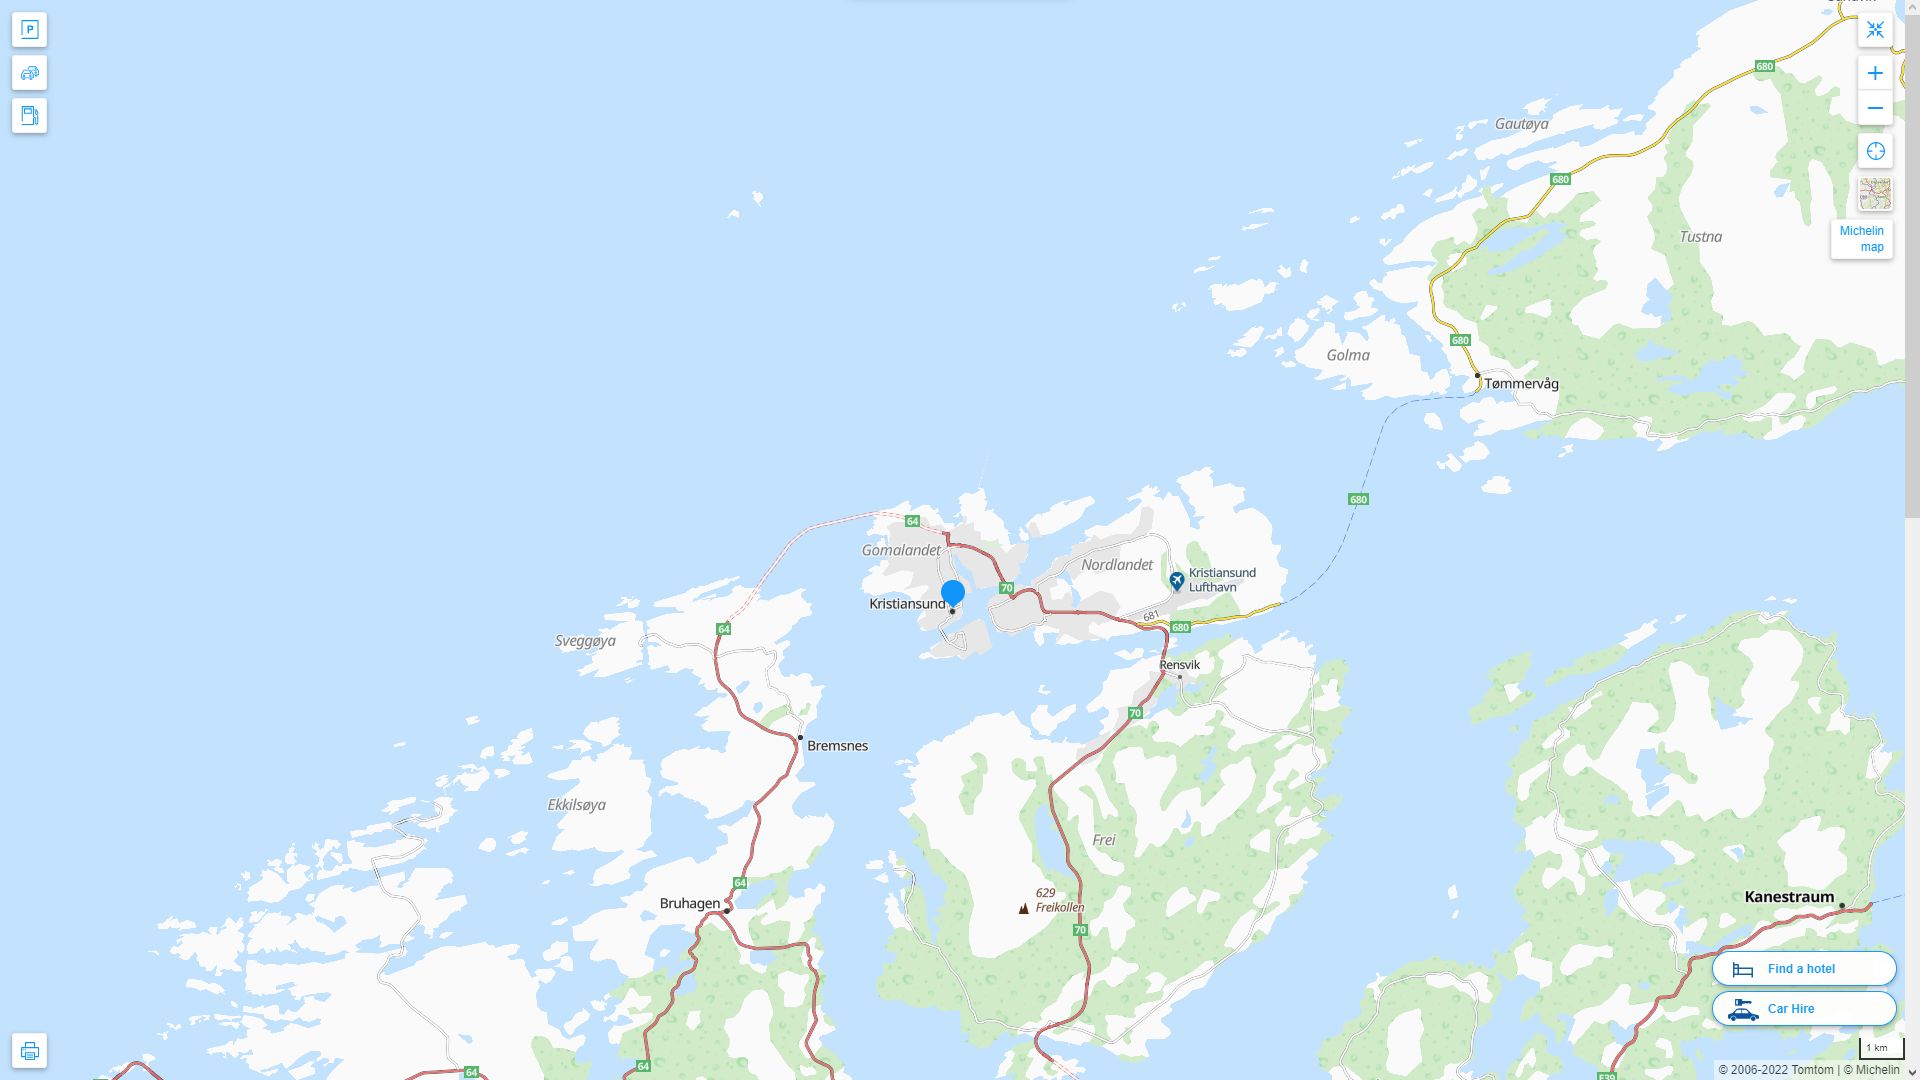 Kristiansund Norvege Autoroute et carte routiere